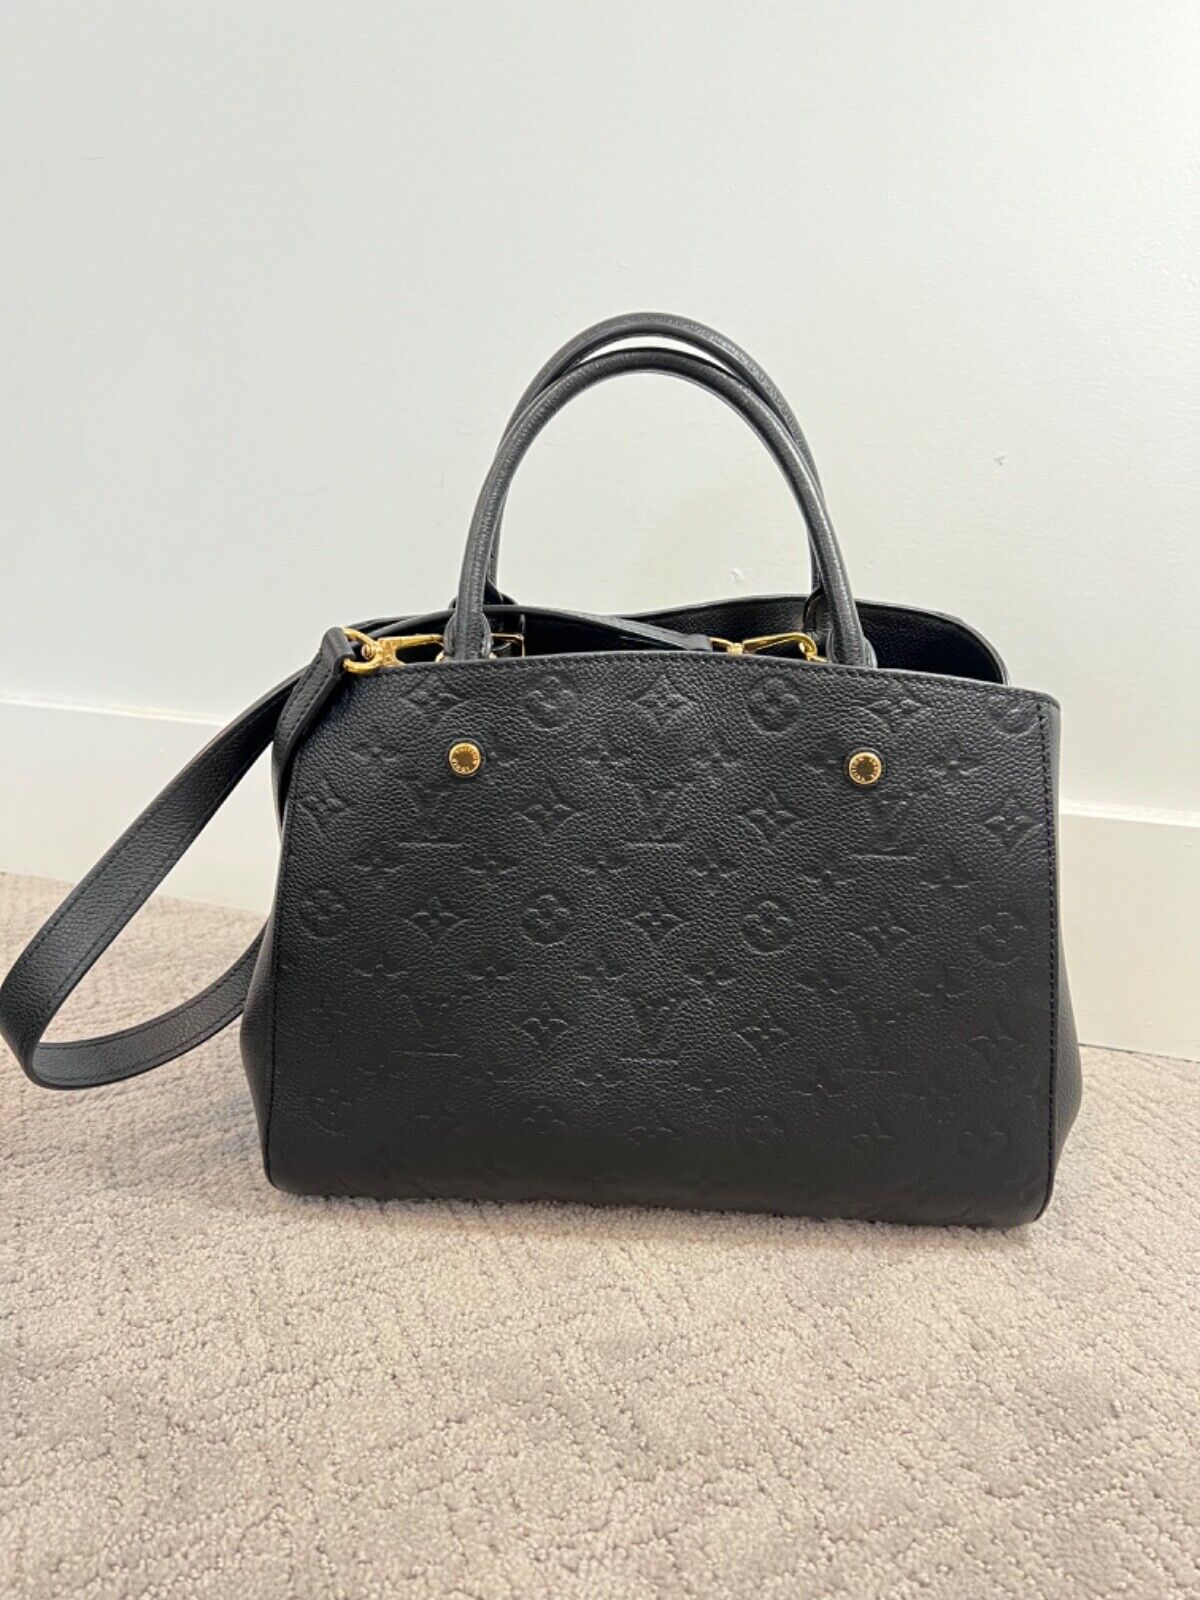 Louis Vuitton black leather designer handbag - image 4